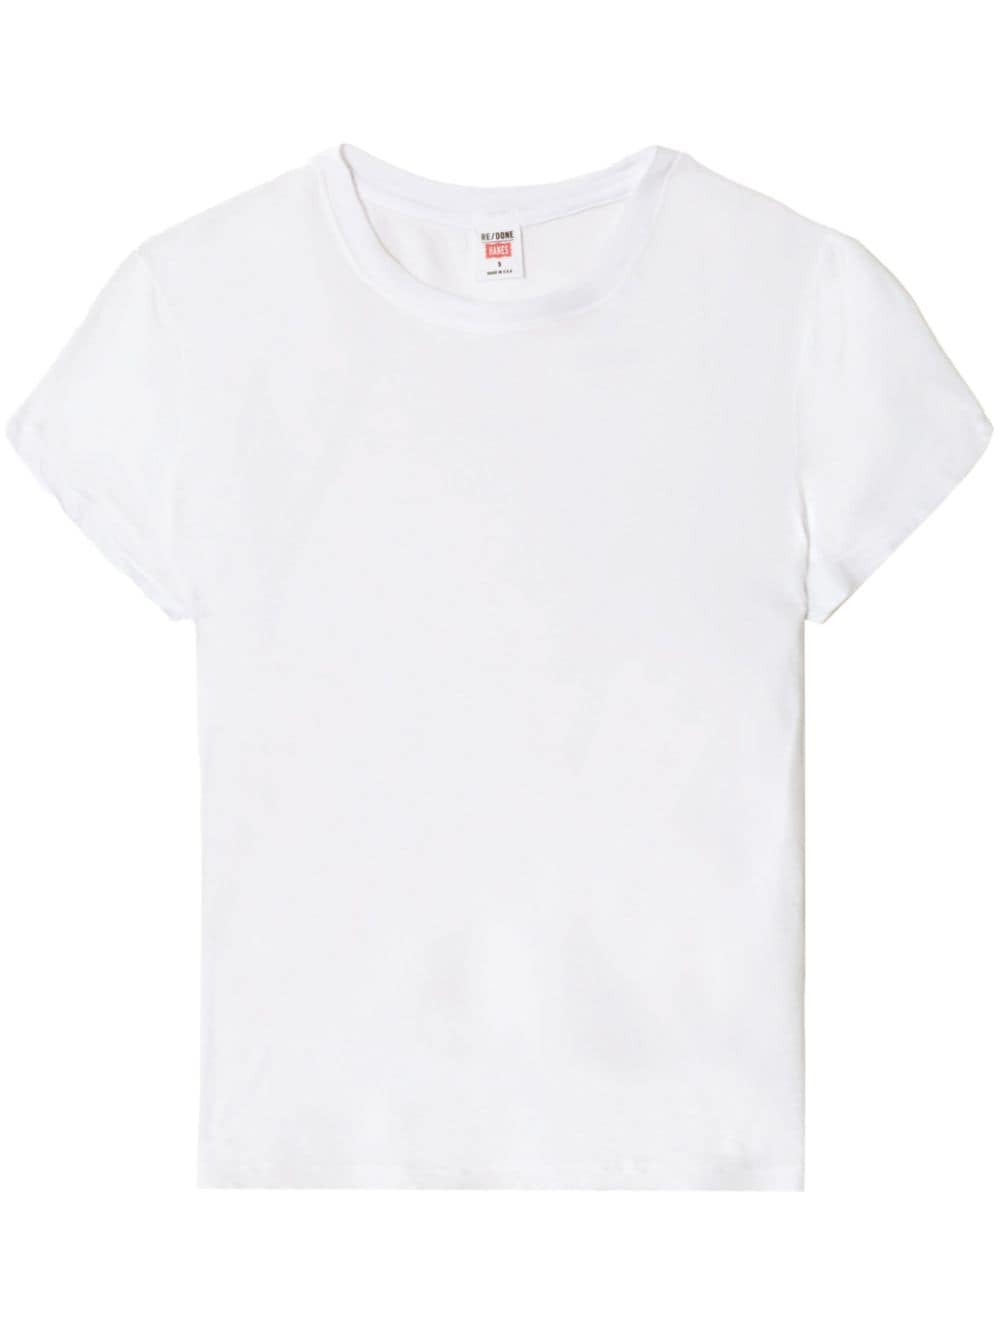 RE/DONE Hanes sheer T-shirt - White von RE/DONE